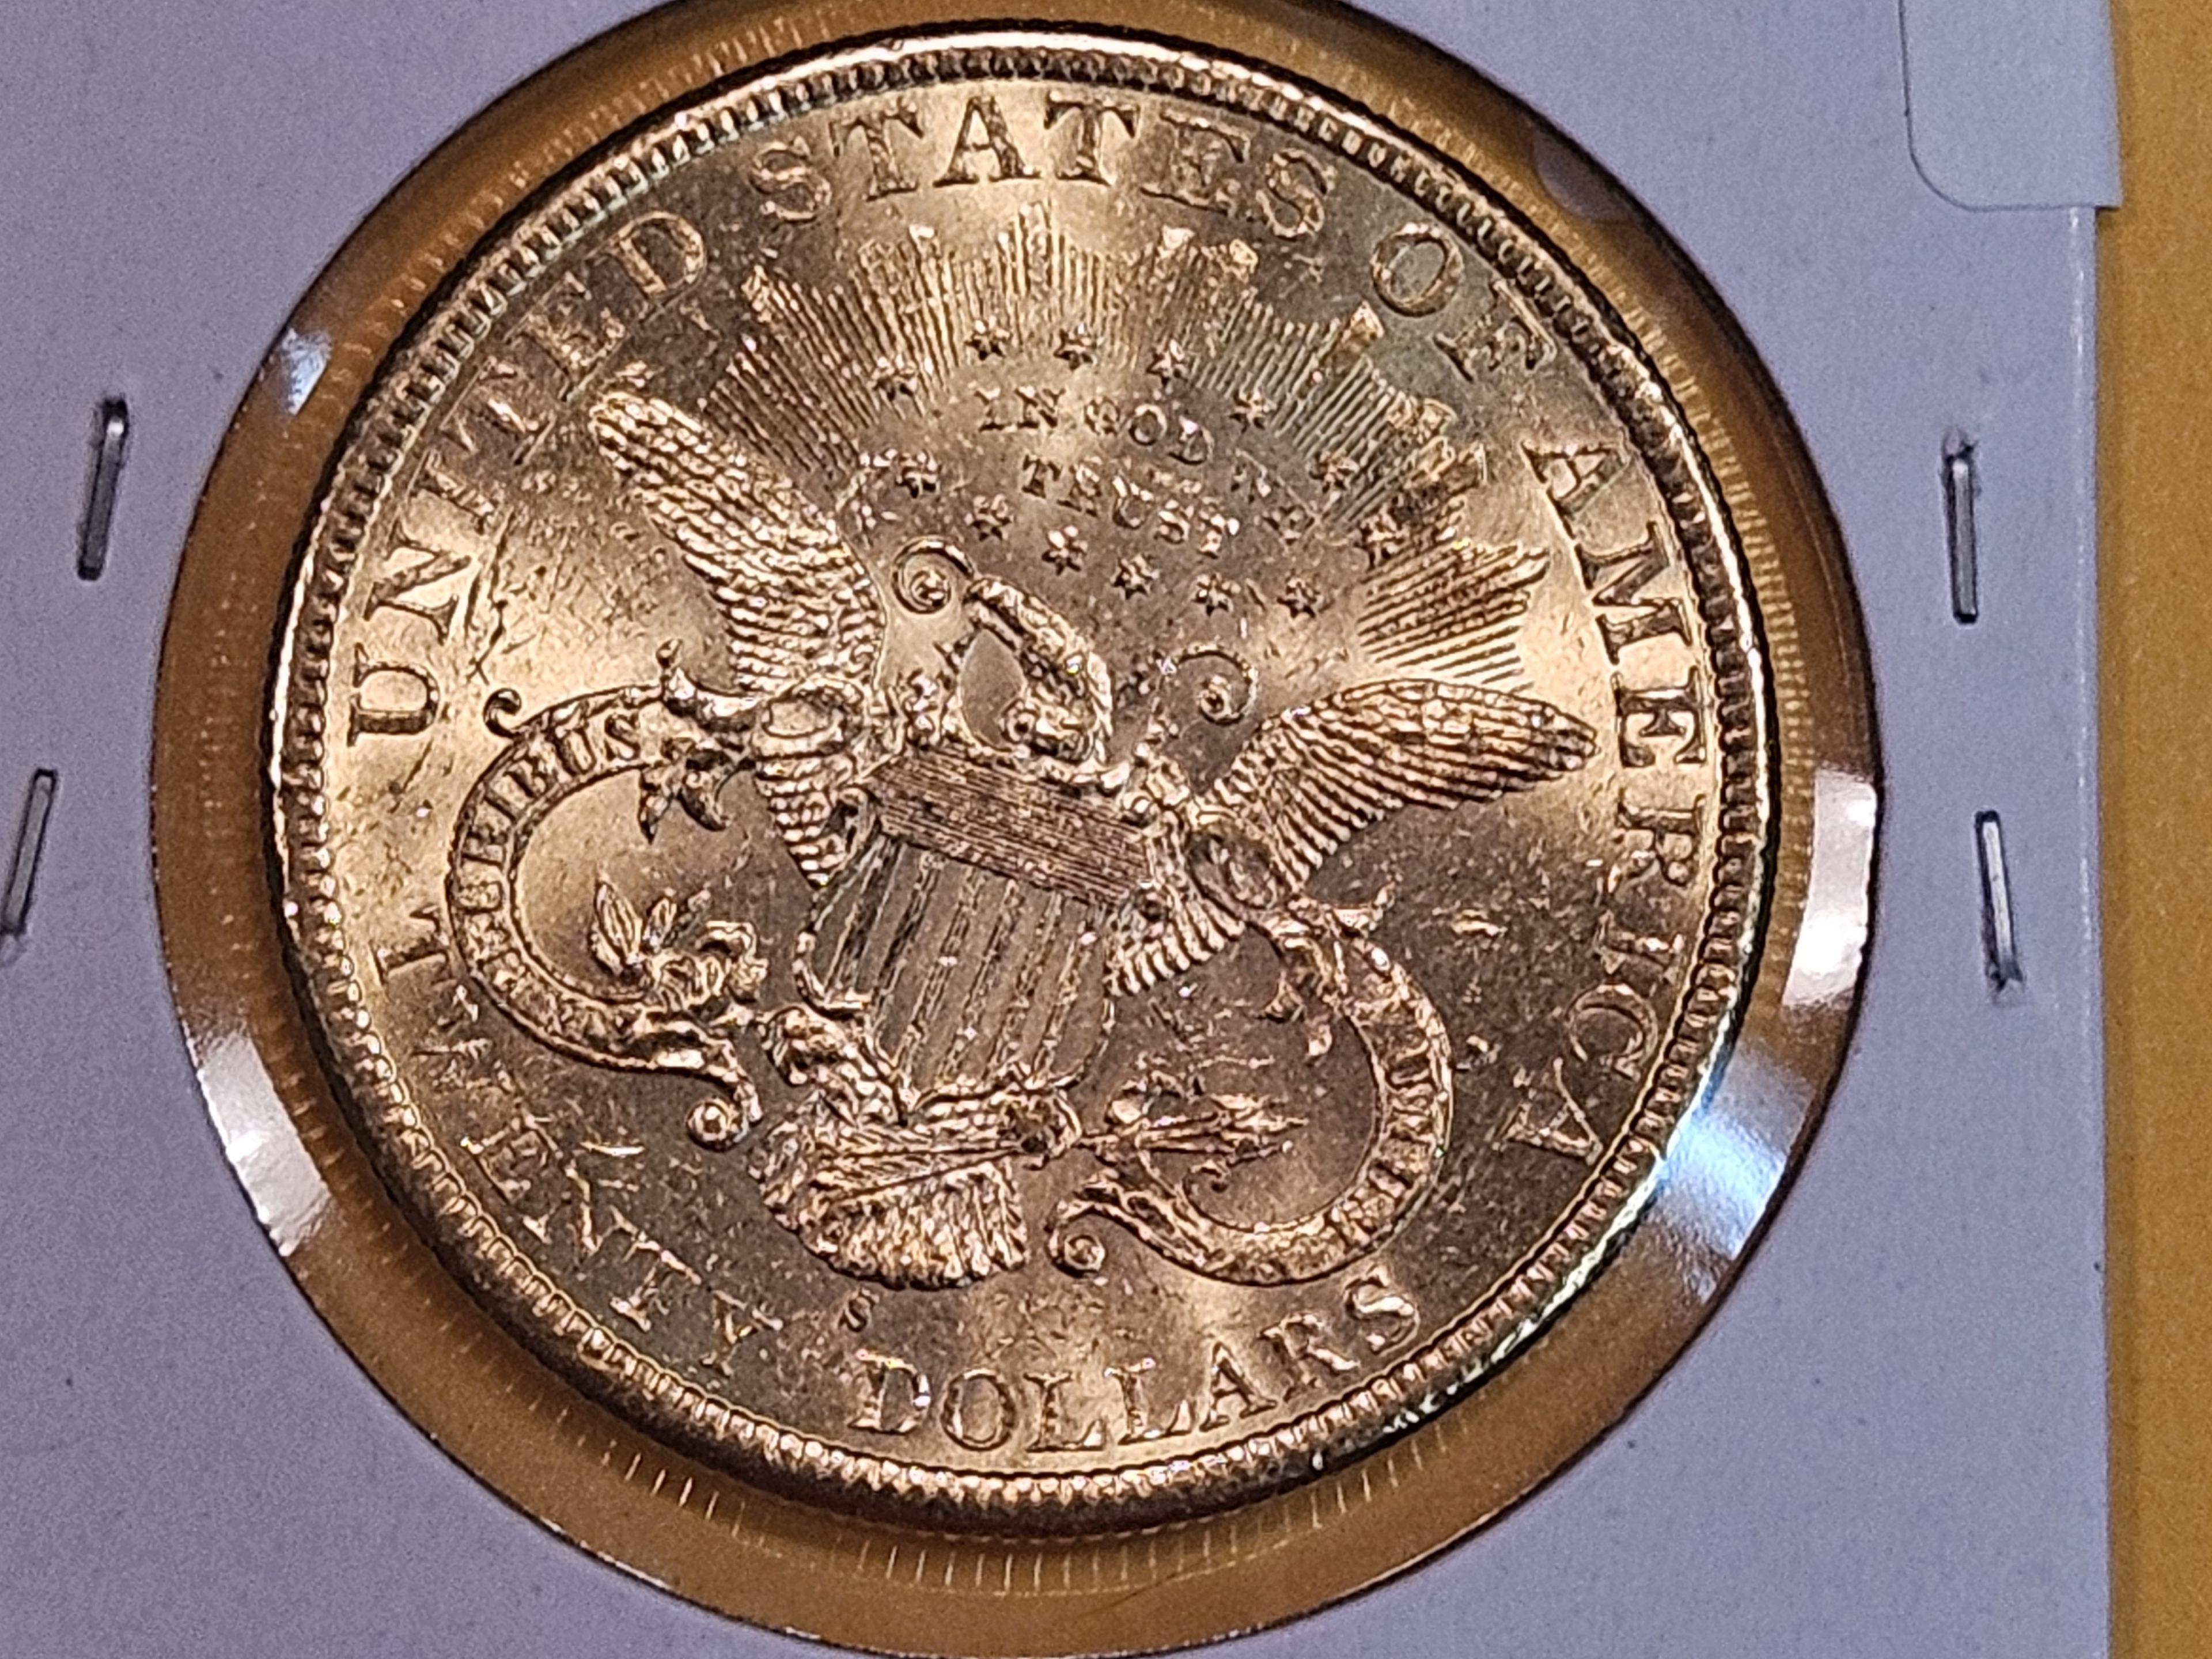 GOLD! Brilliant Uncirculated Plus 1898-S Gold Liberty Head Twenty Dollar